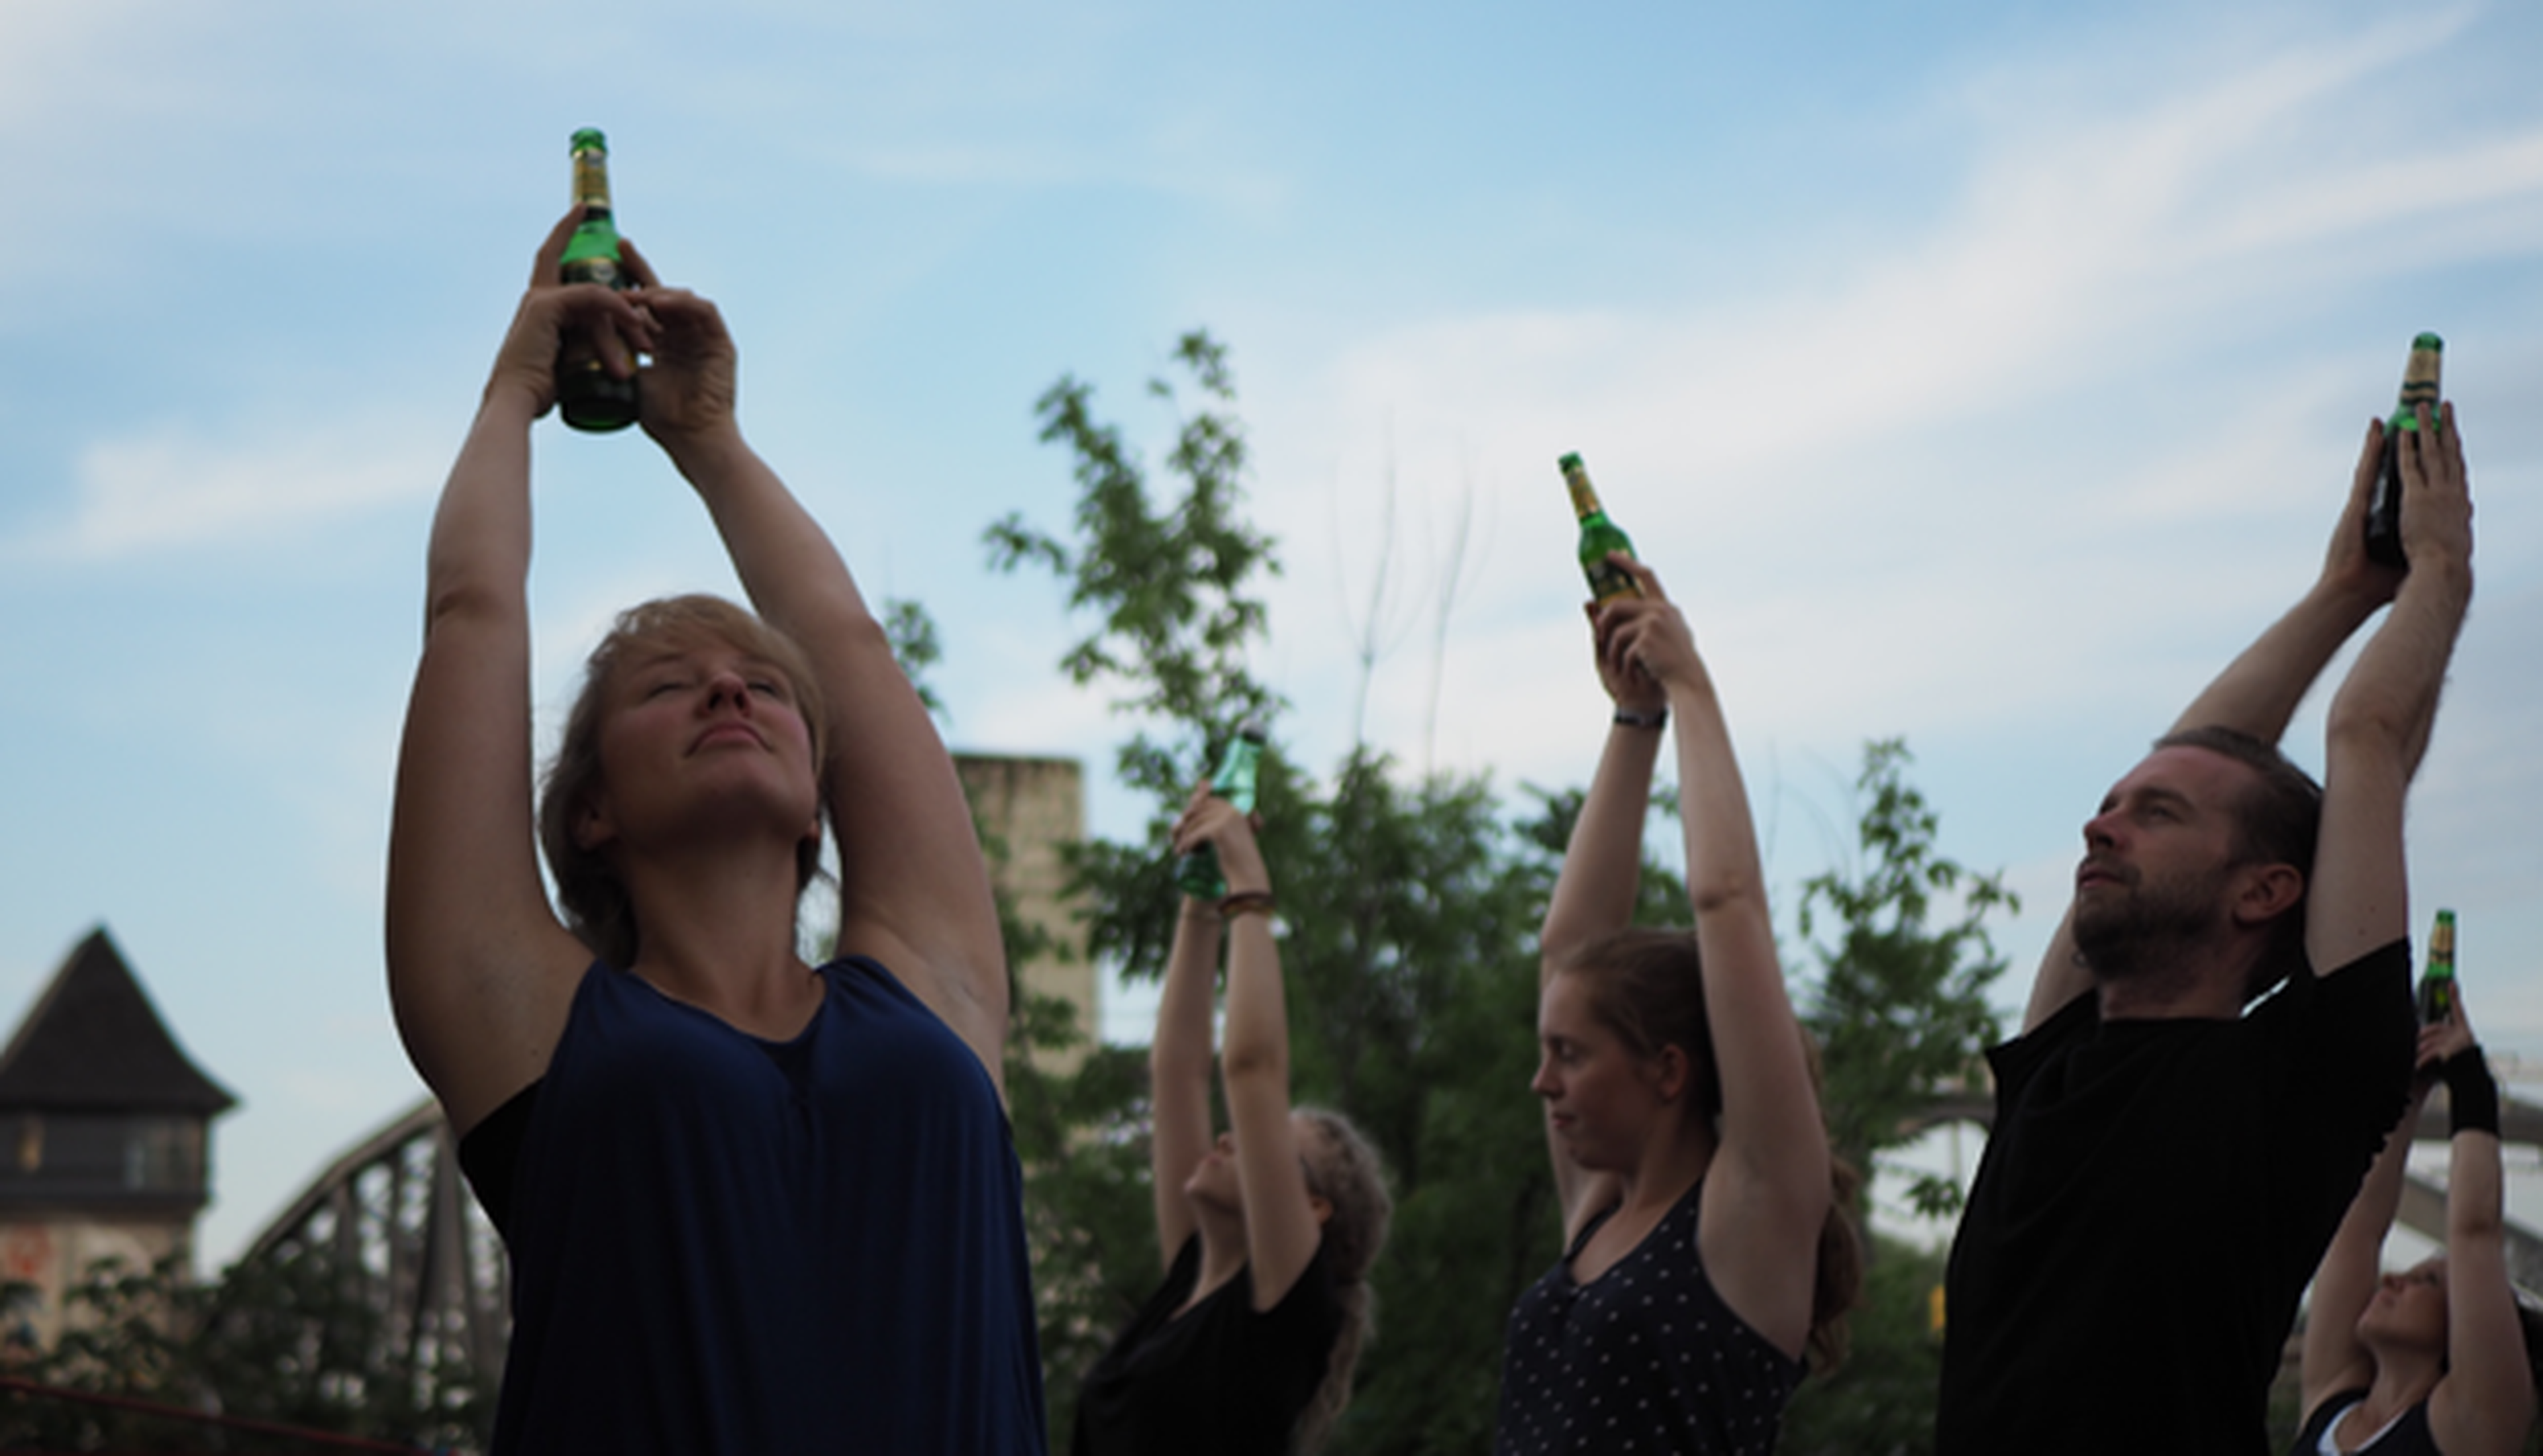 Beer Yoga, excusa perfecta para mezclar cerveza y fitness